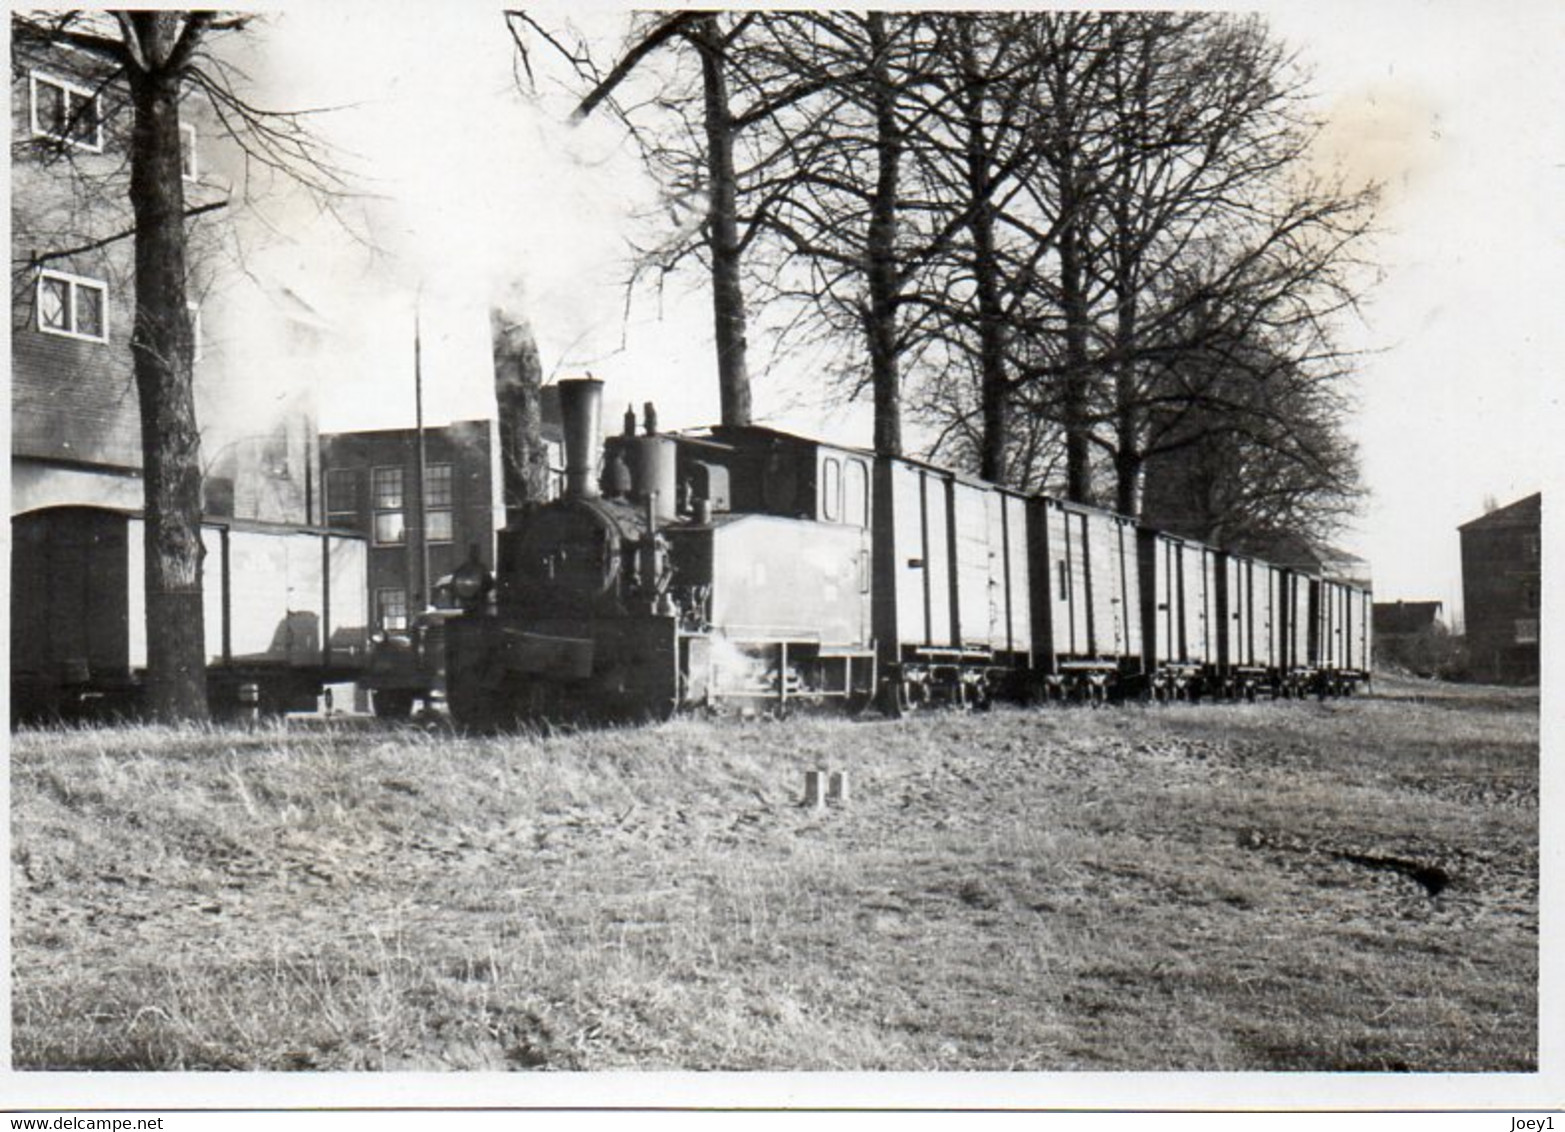 Photo  Loco Et Tramway En Hollande ,indications Au Dos,format 7/10. - Trains